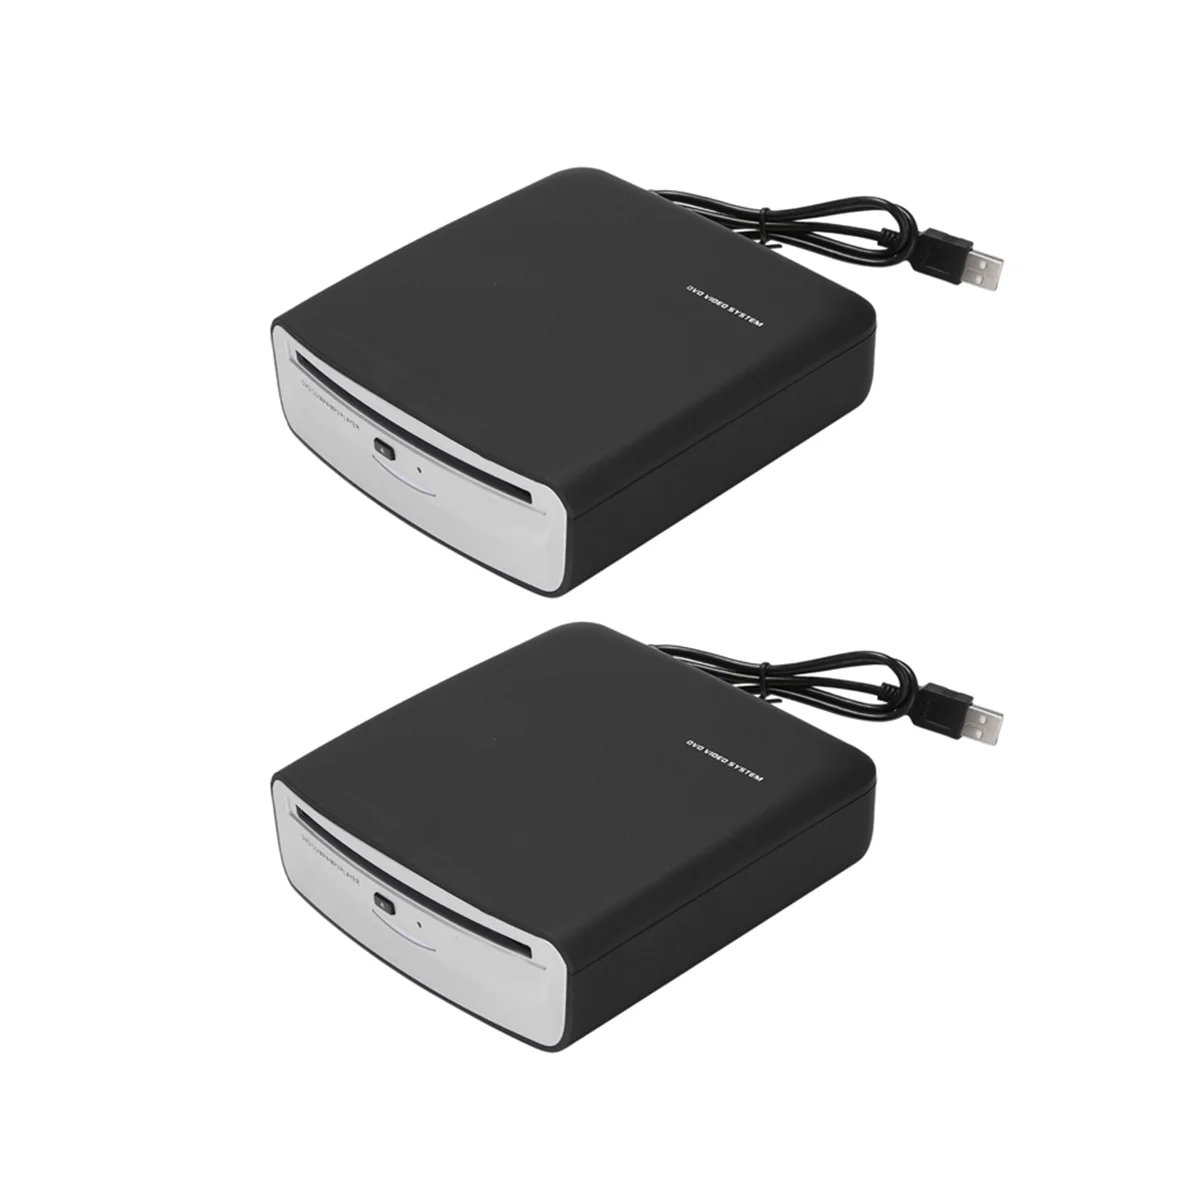 2Pcs הרדיו CD/DVD צלחת תיבת שחקן עם כוח USB אות העברת סטריאופוניים חיצוניים עבור אנדרואיד נגן מולטימדיה לרכב